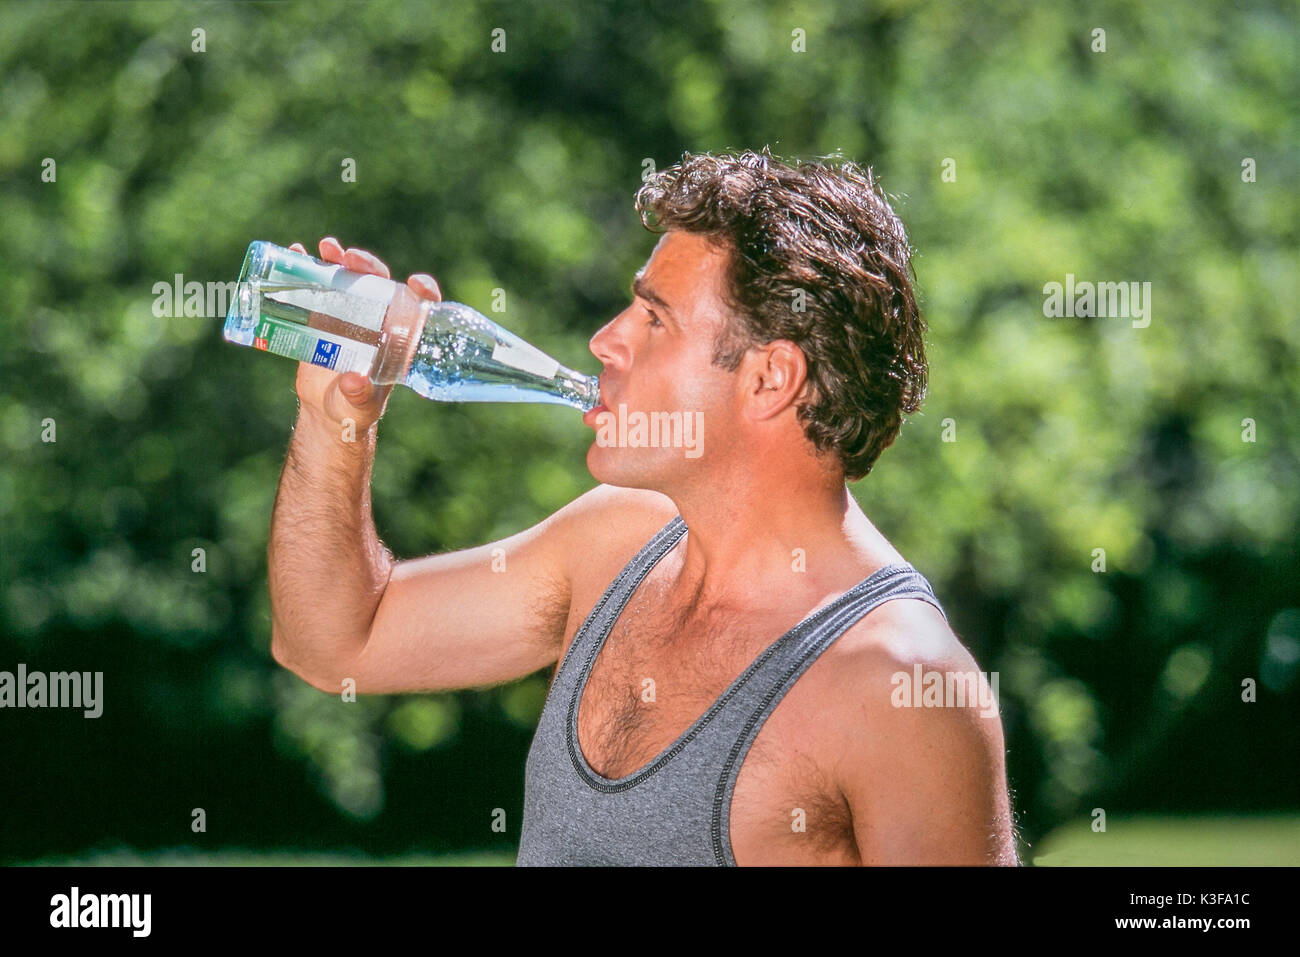 Hombre a la prenda deportiva bebe agua de botella Foto de stock